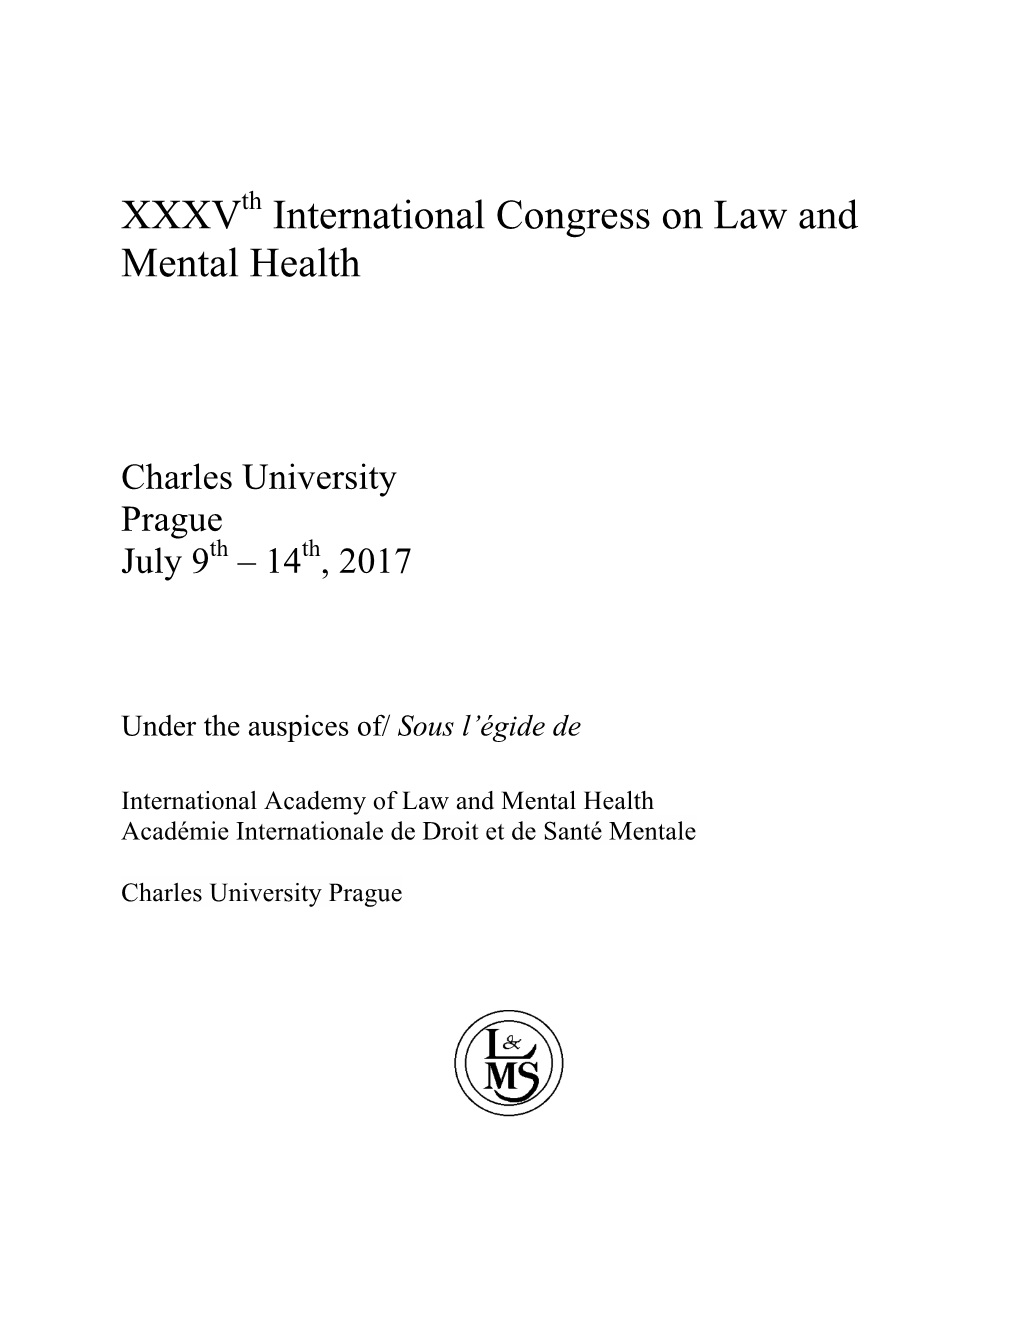 XXXV International Congress on Law and Mental Health